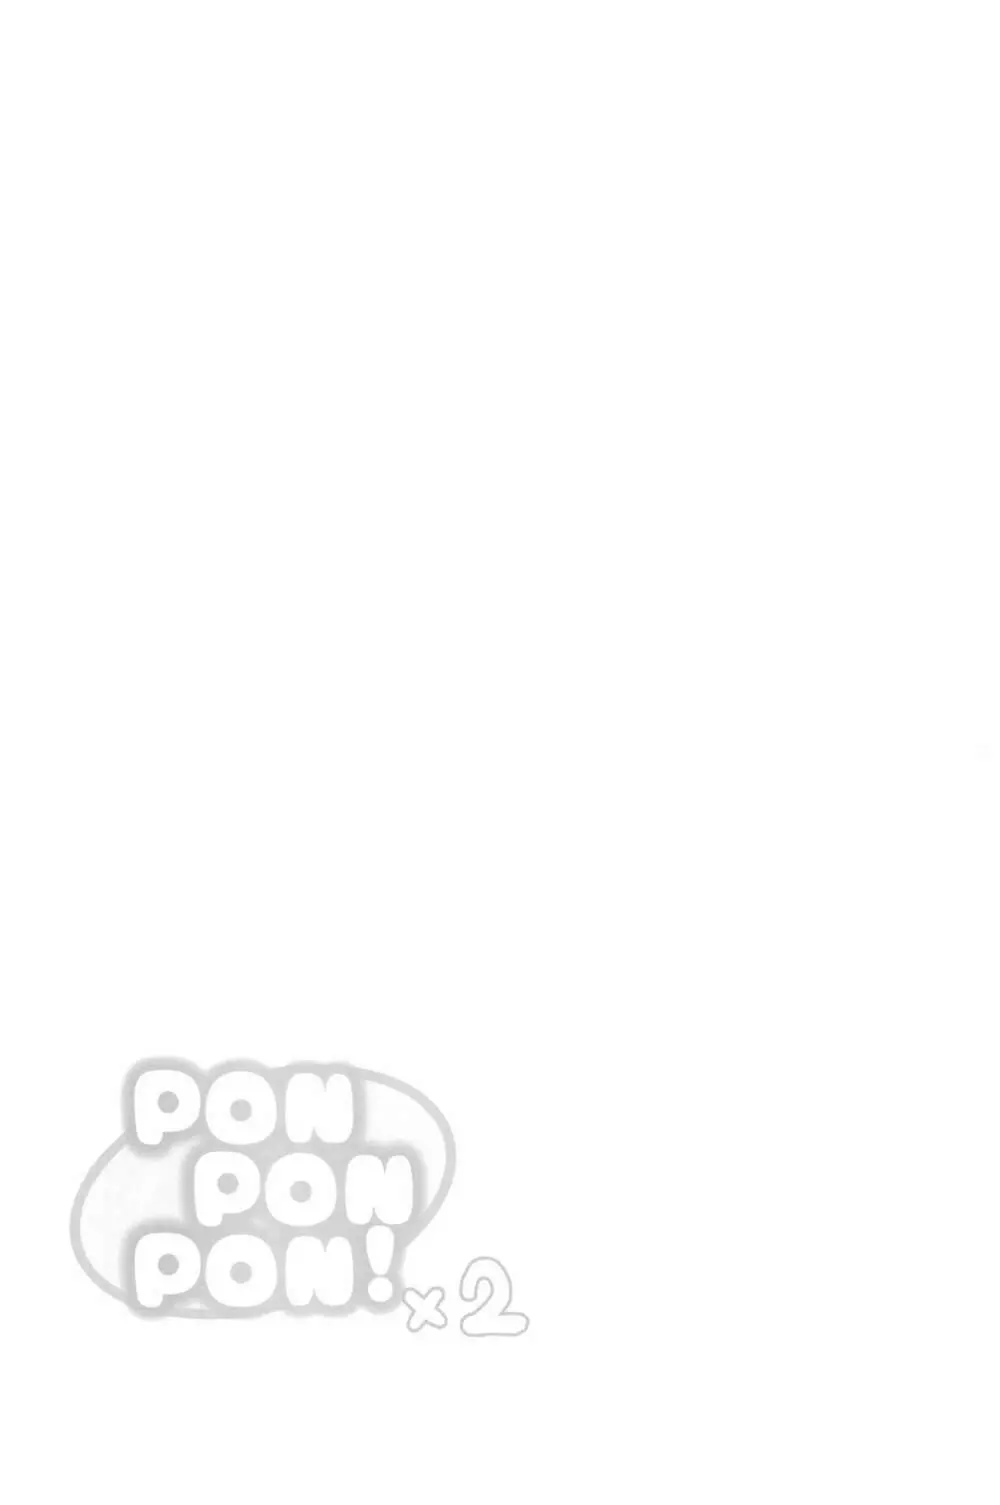 PONPONPON!×2 - page83